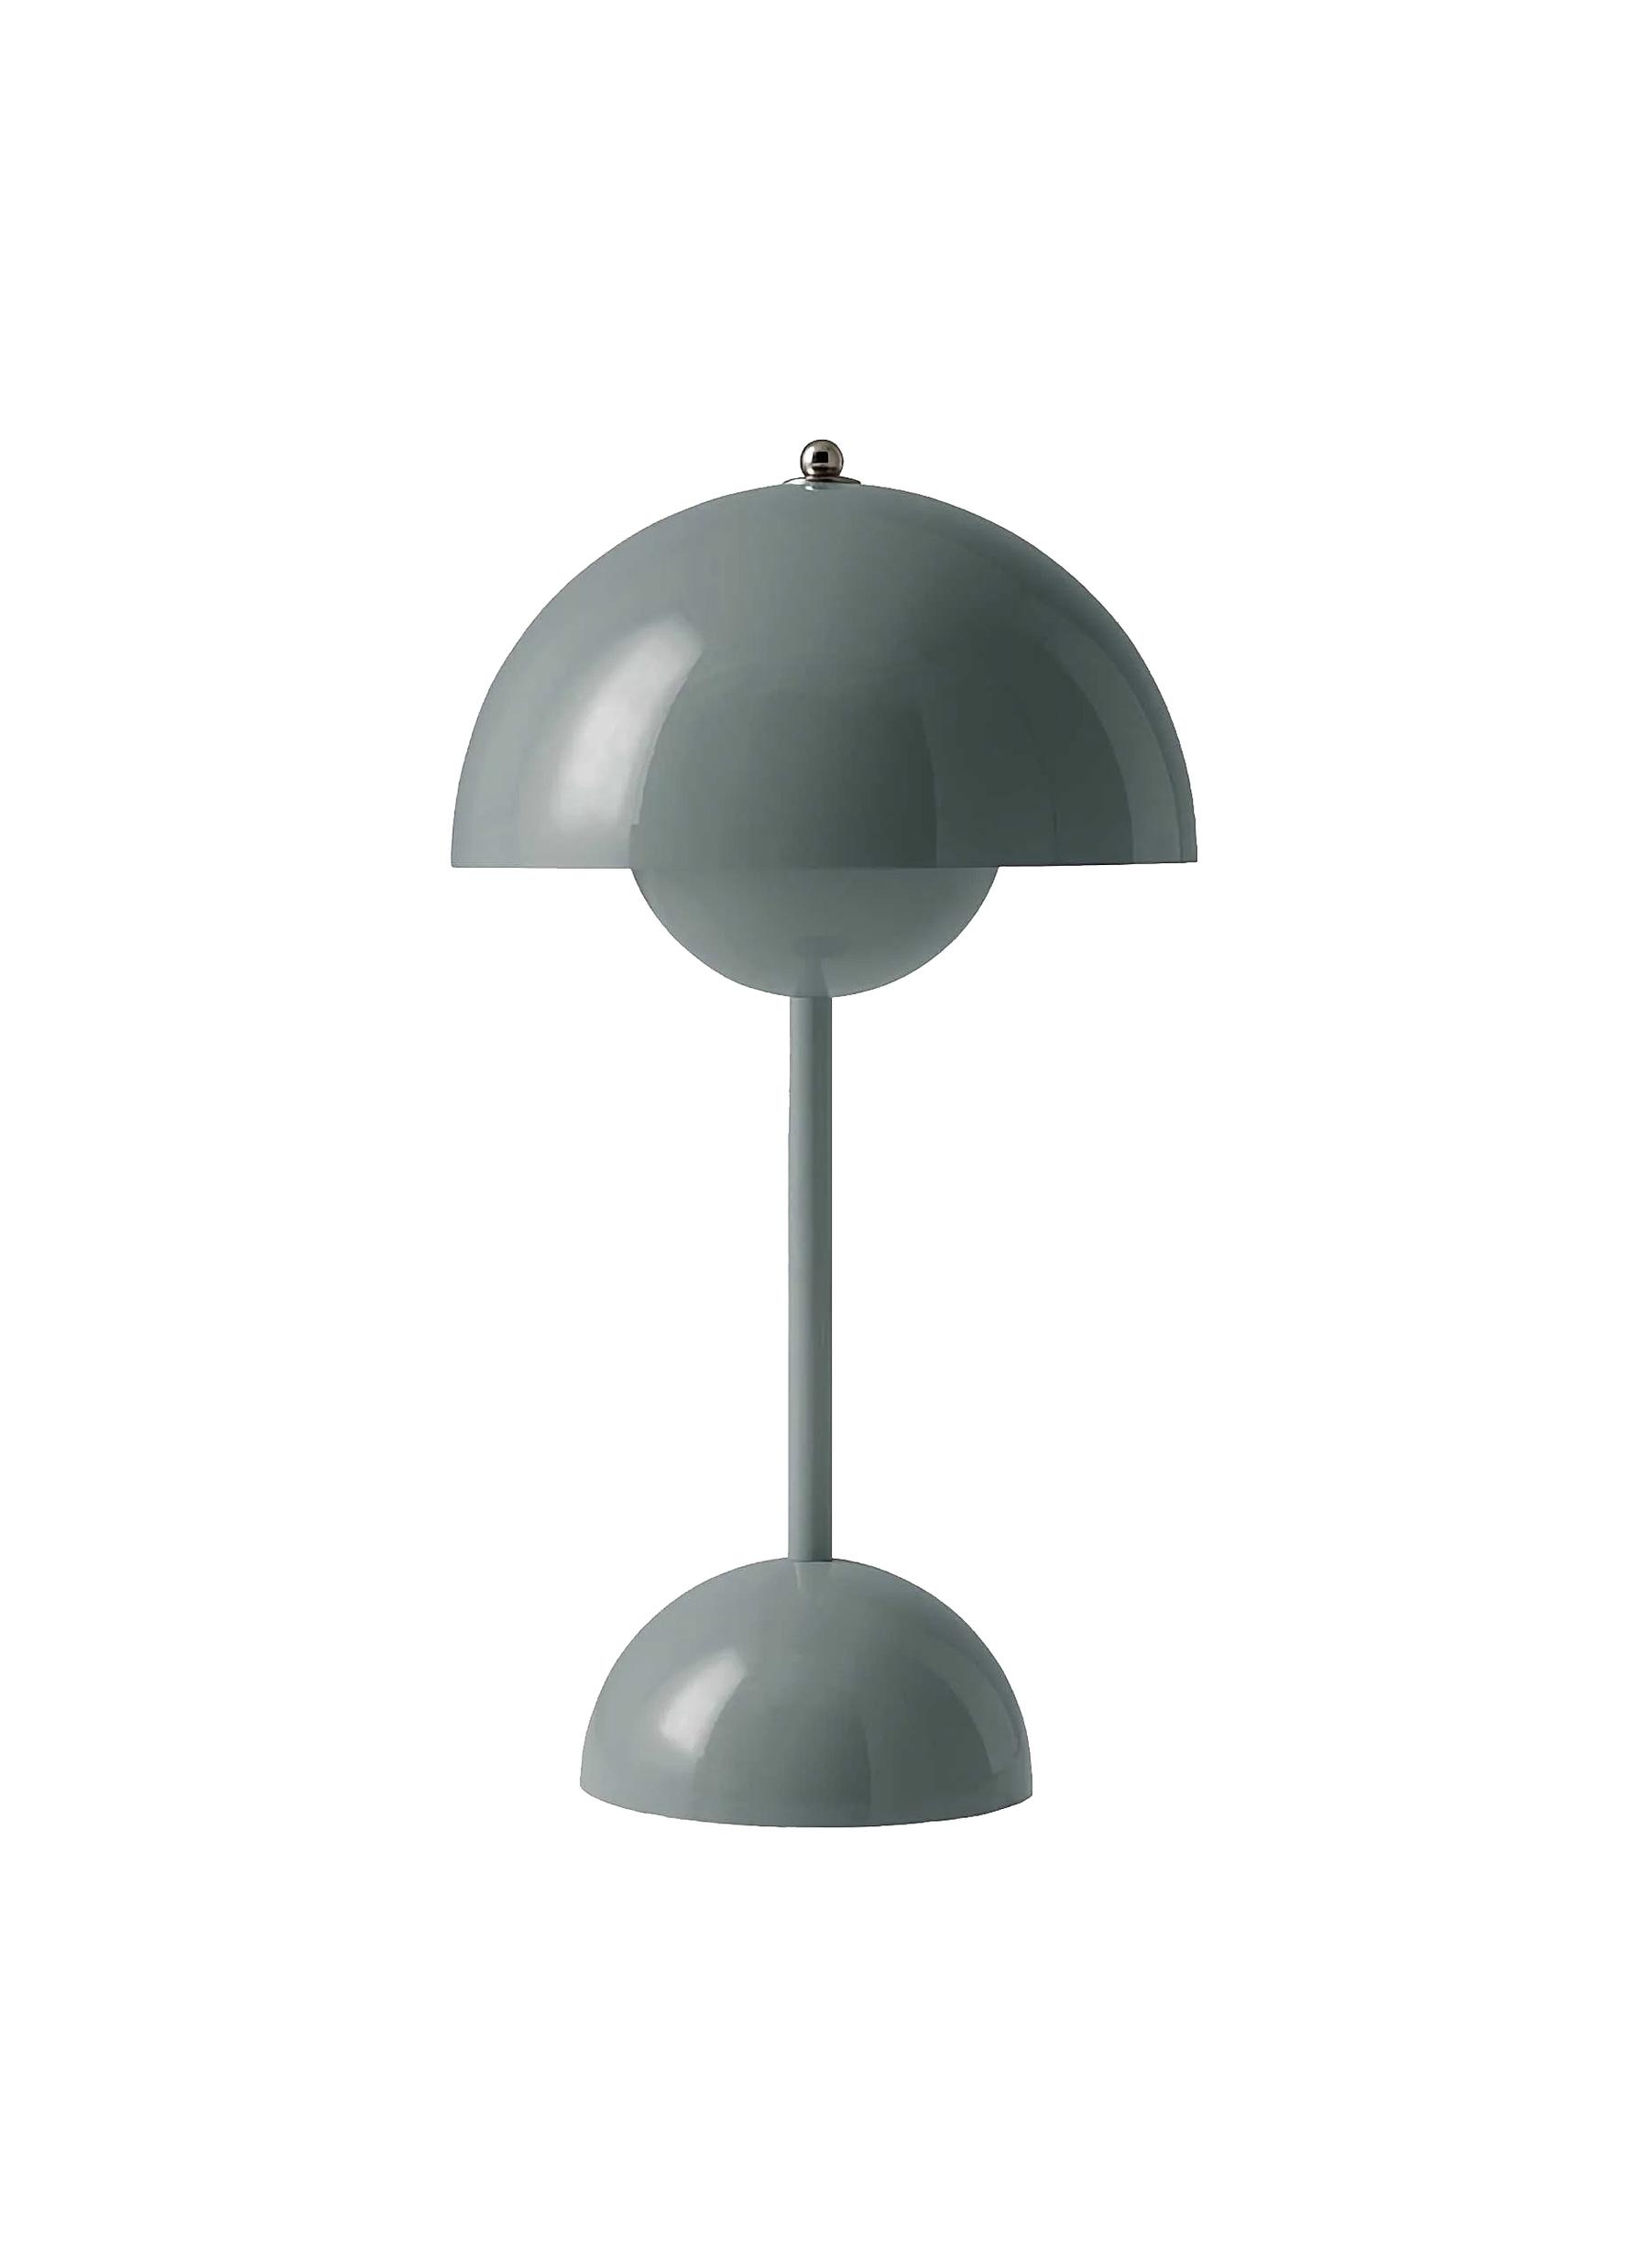 â€˜FLOWERPOT VP9’ PORTABLE TABLE LAMP - STONE BLUE